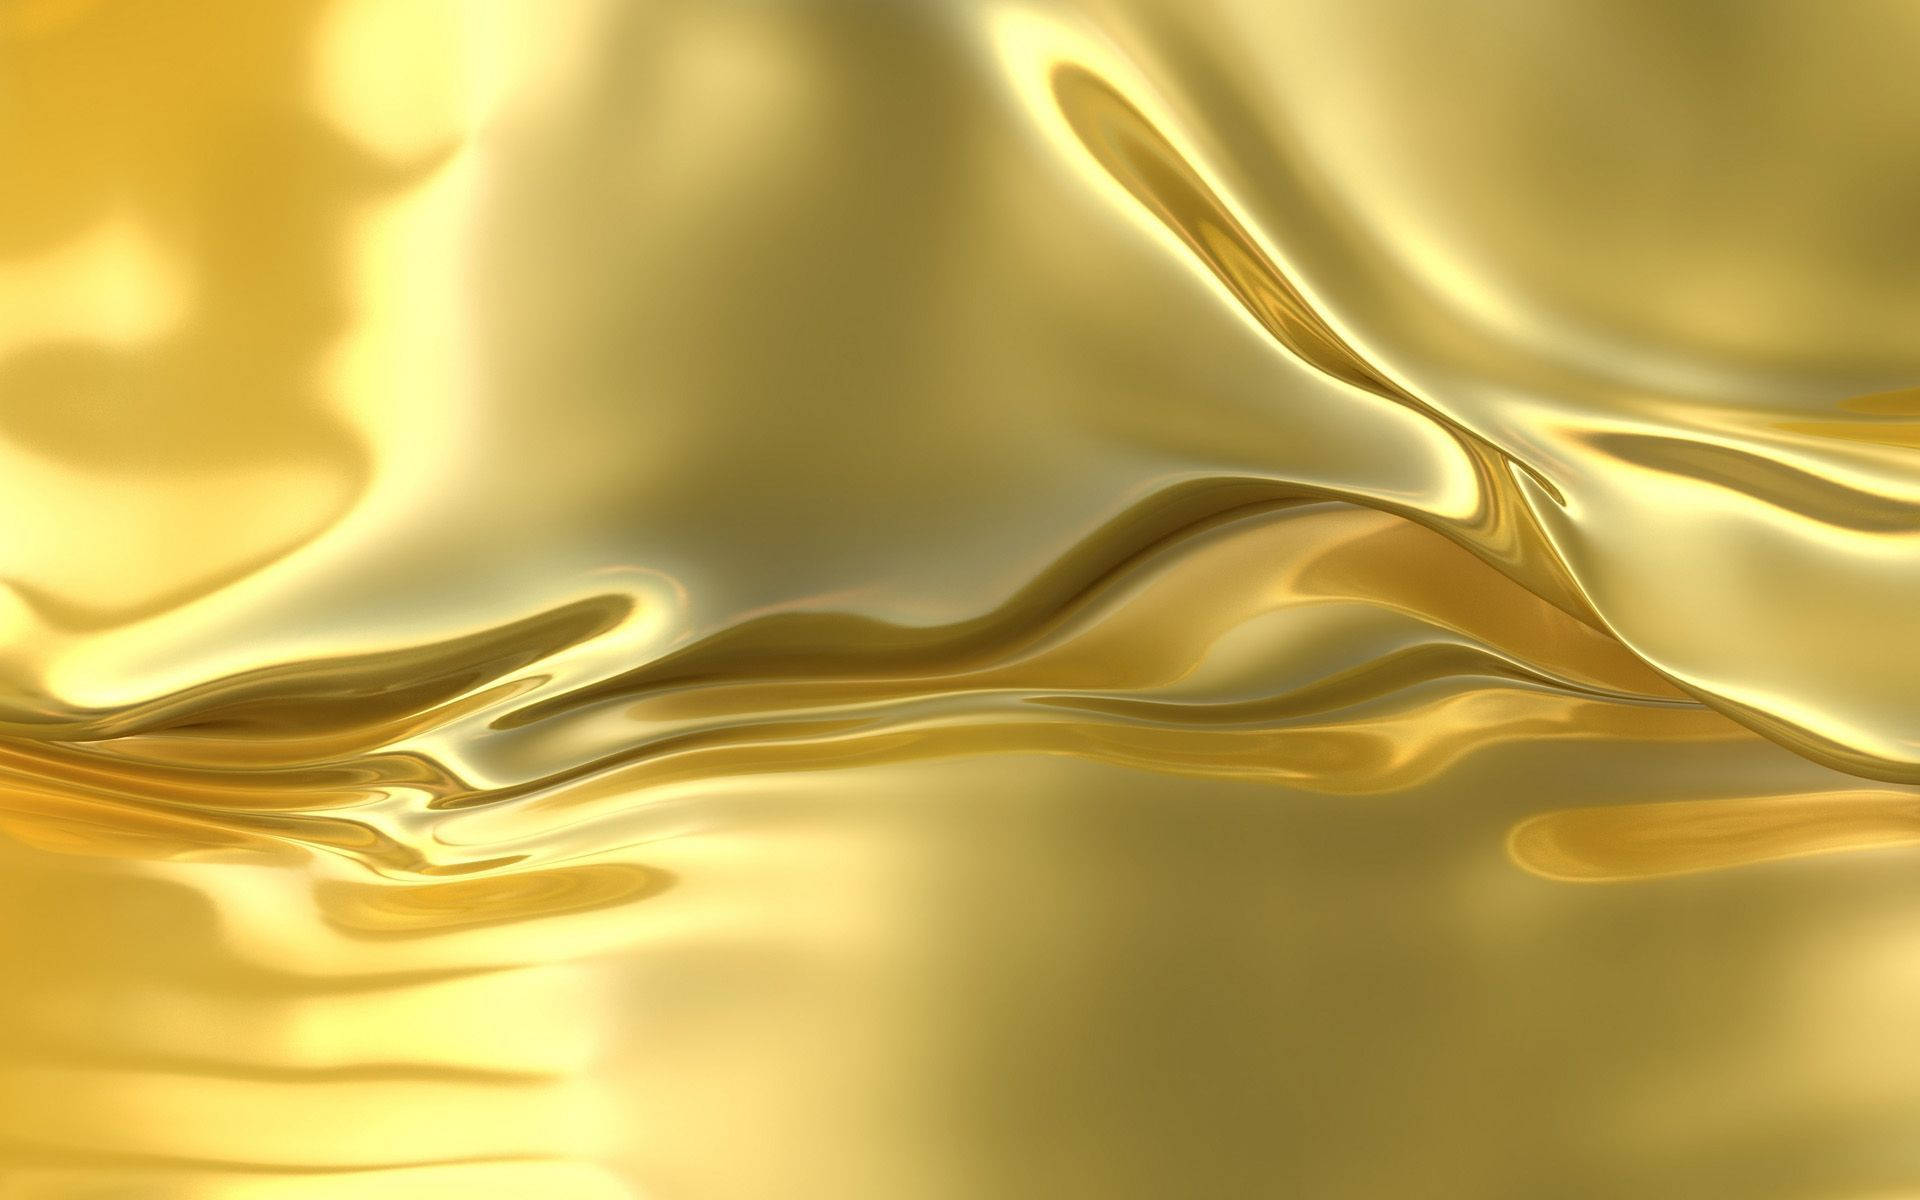 Gold Texture Background Photos